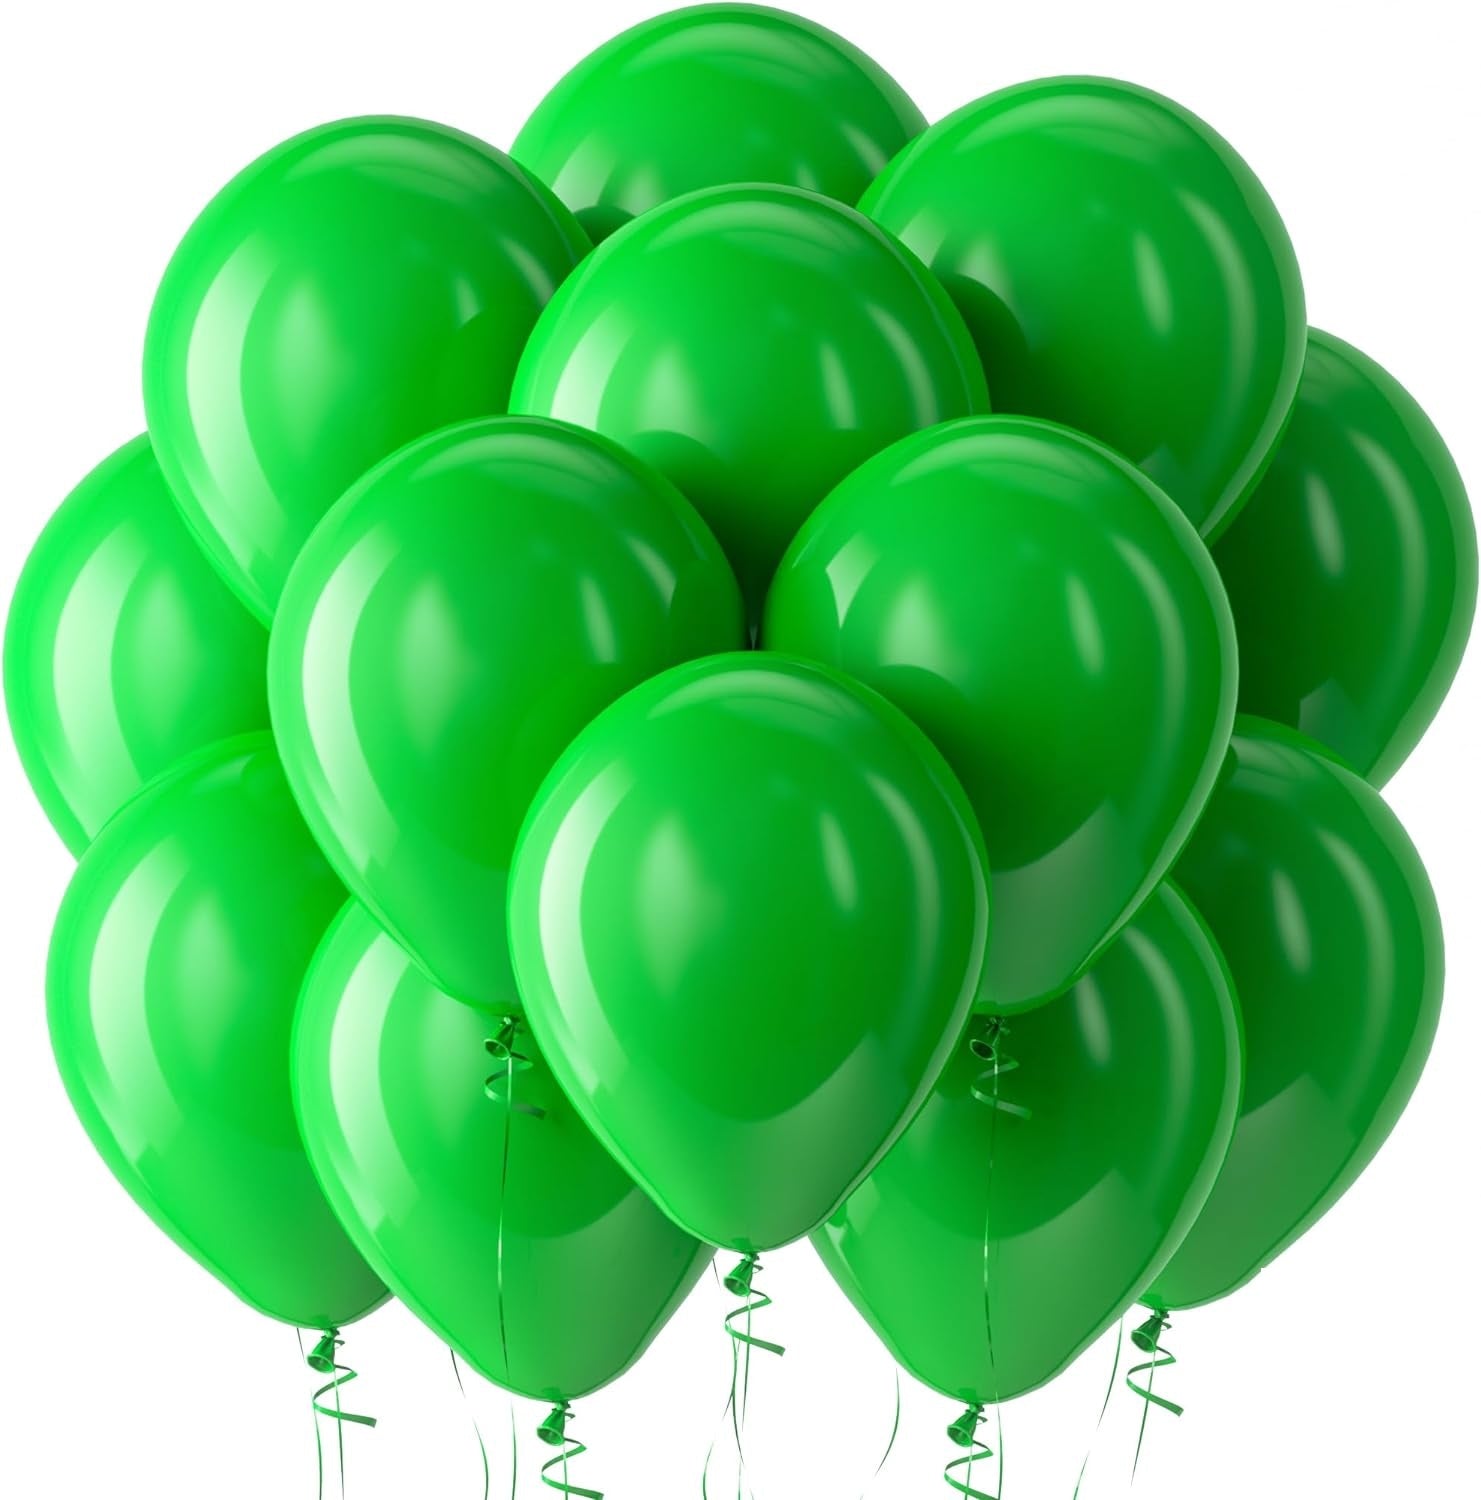 12 Inch Metalic Balloons